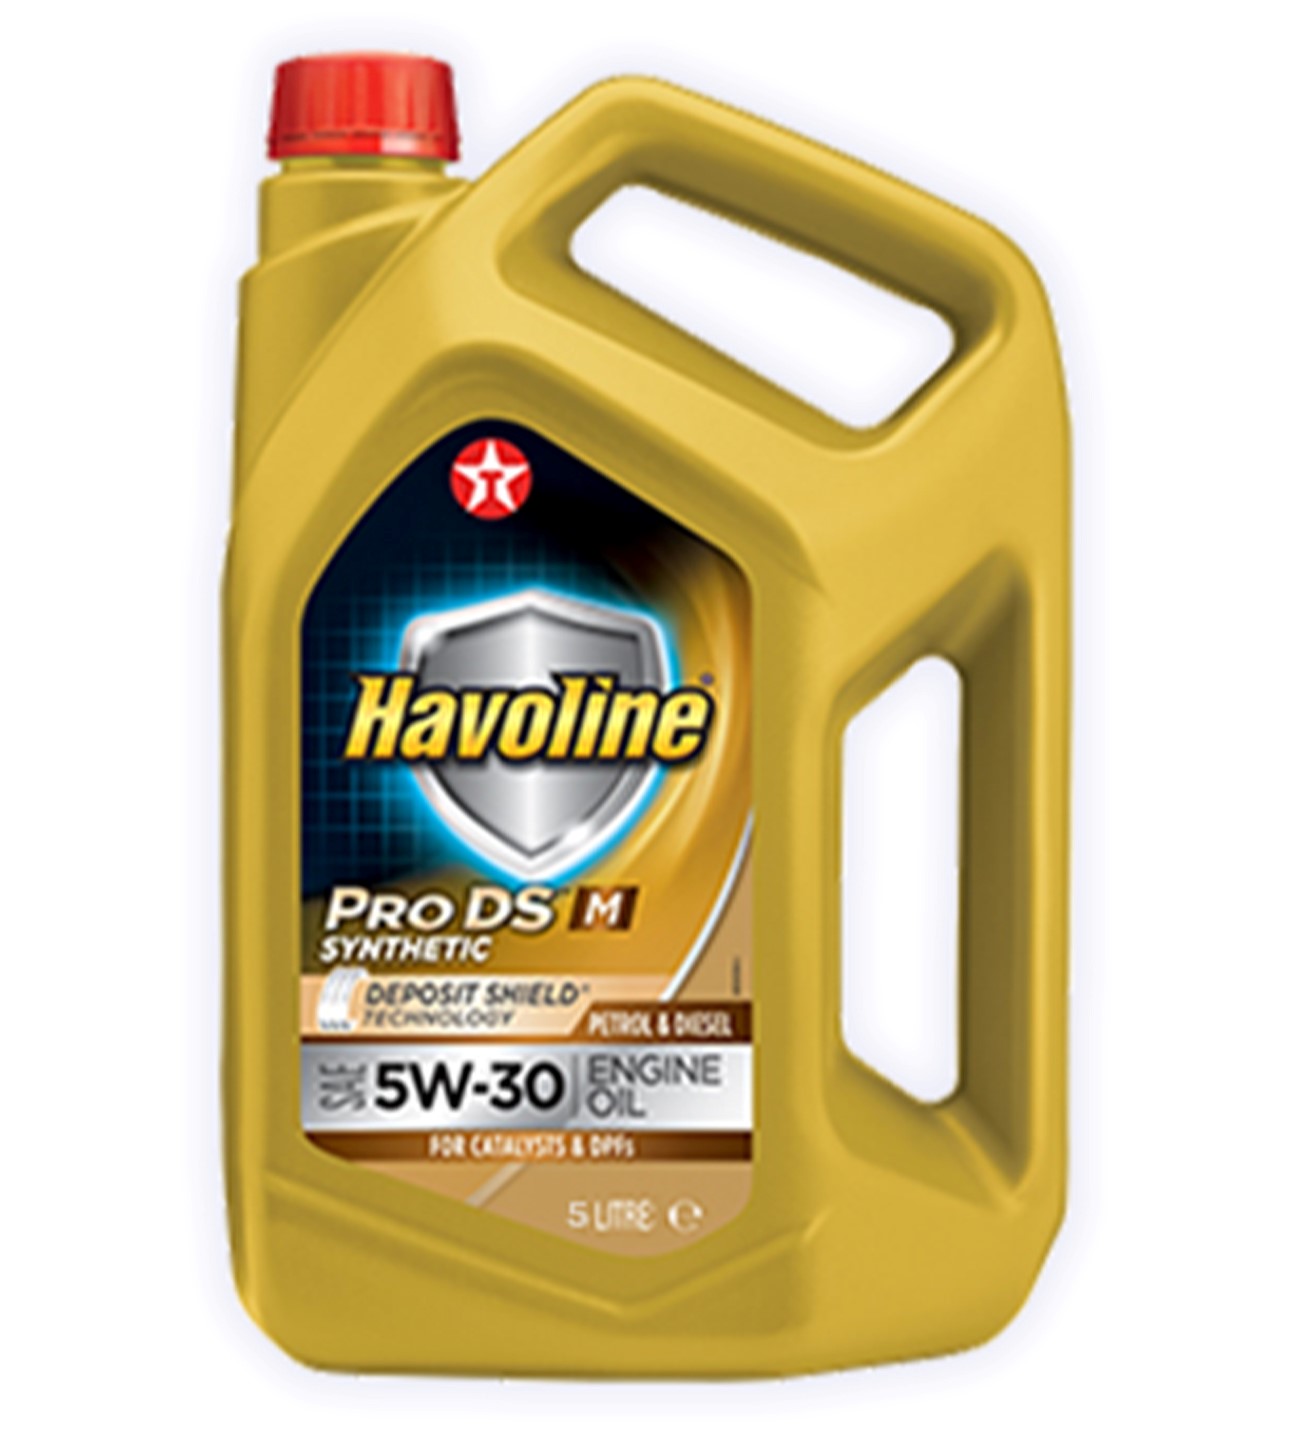 TX HAVOLINE PRODS M 5W-30 4X5L